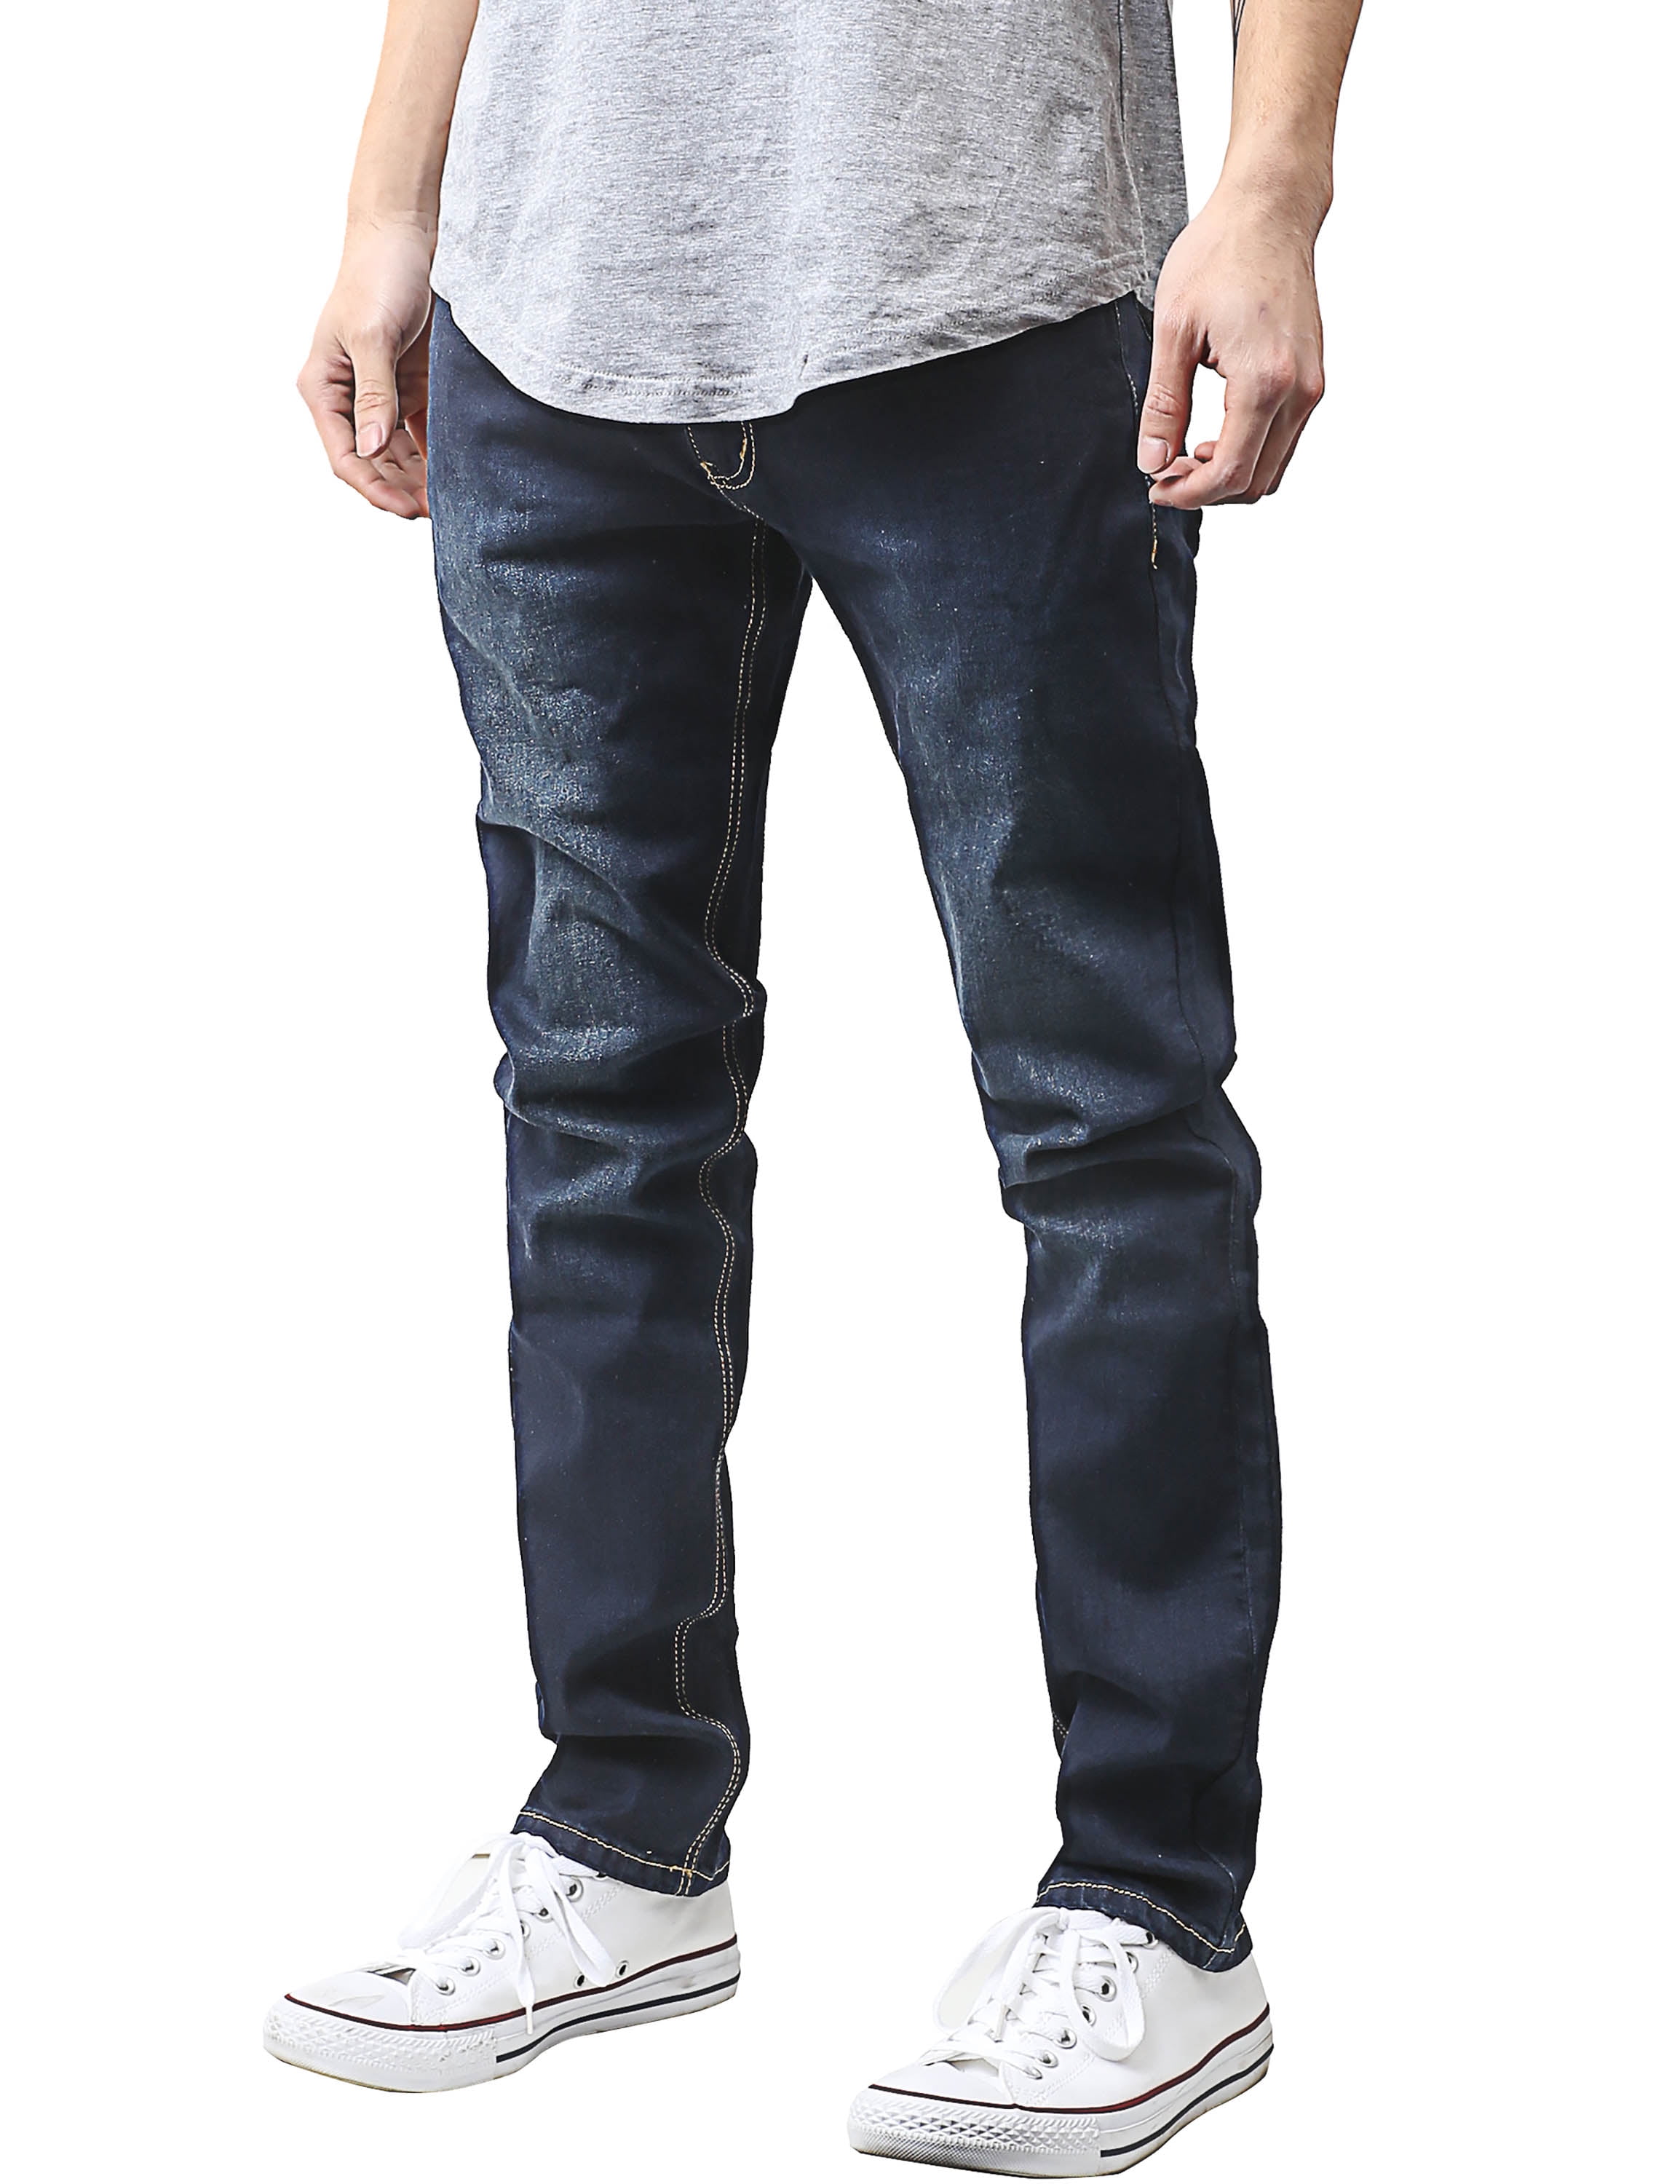 Kayden K Men's Slim Fit Stretch Jeans Raw Denim Pants SS101 